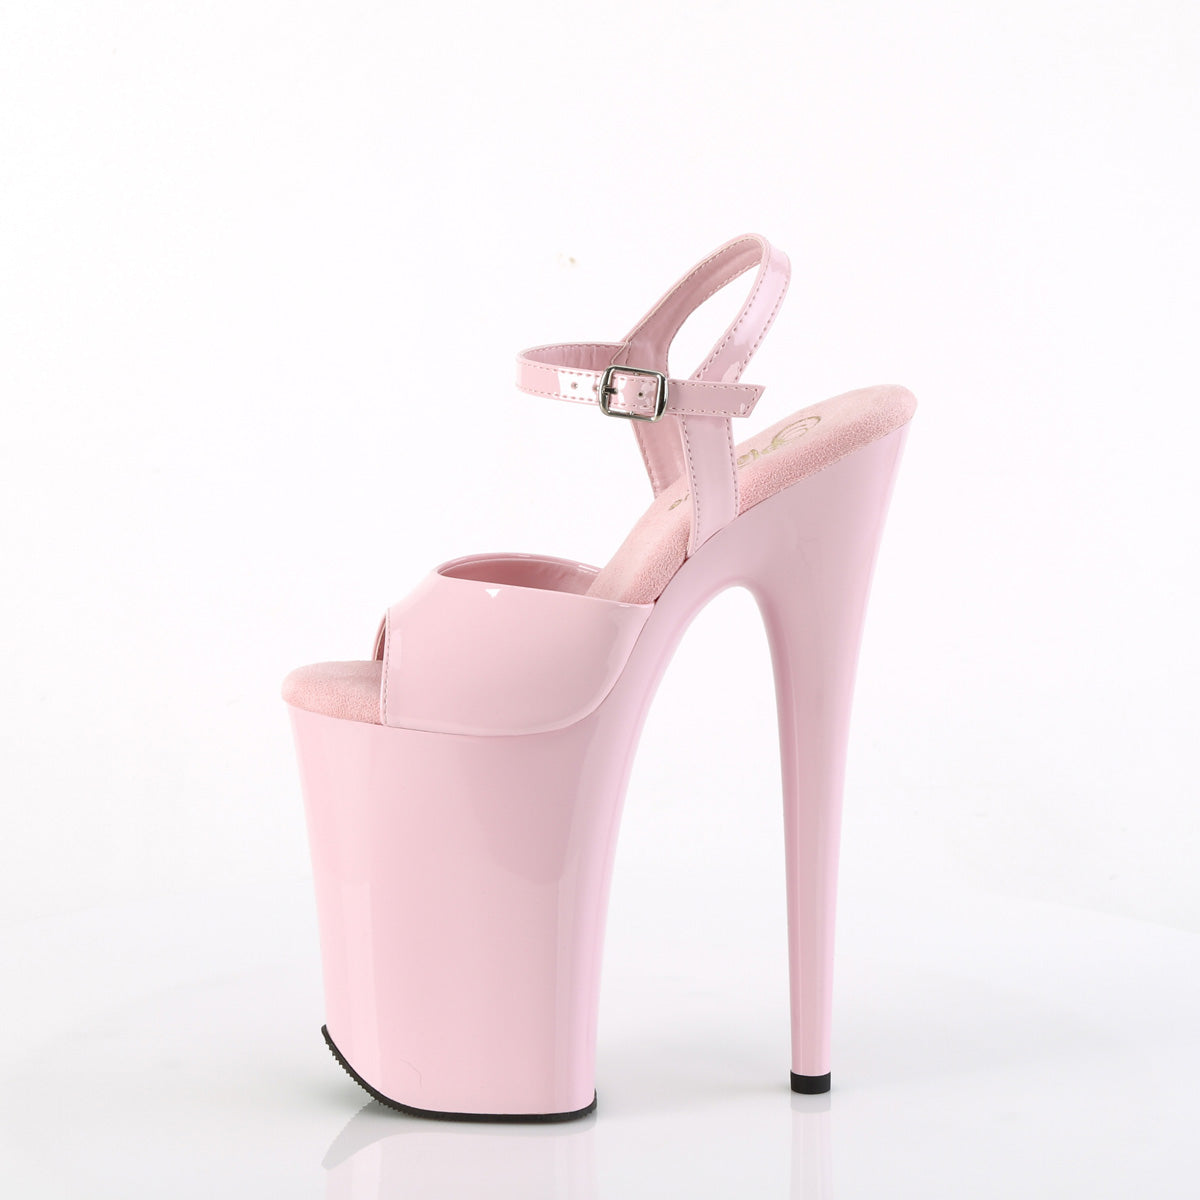 9 Inch Heel INFINITY-909 Baby Pink Patent